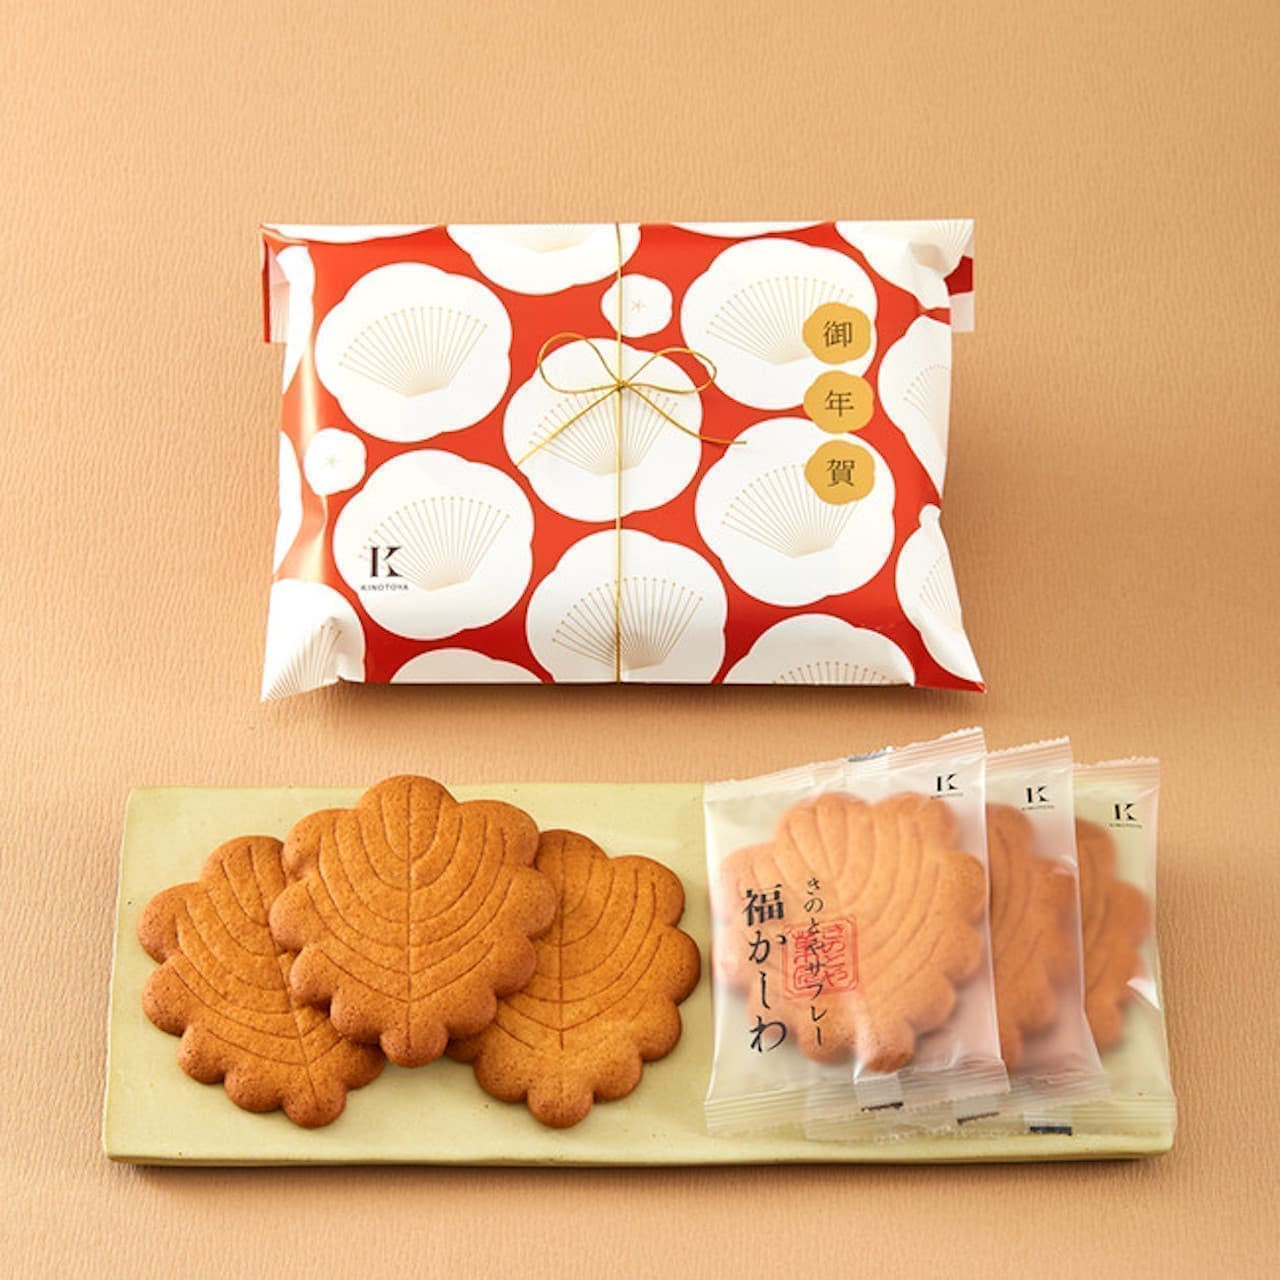 Kinotoya "New Year Limited Package Fukukashiwa 6 pieces"